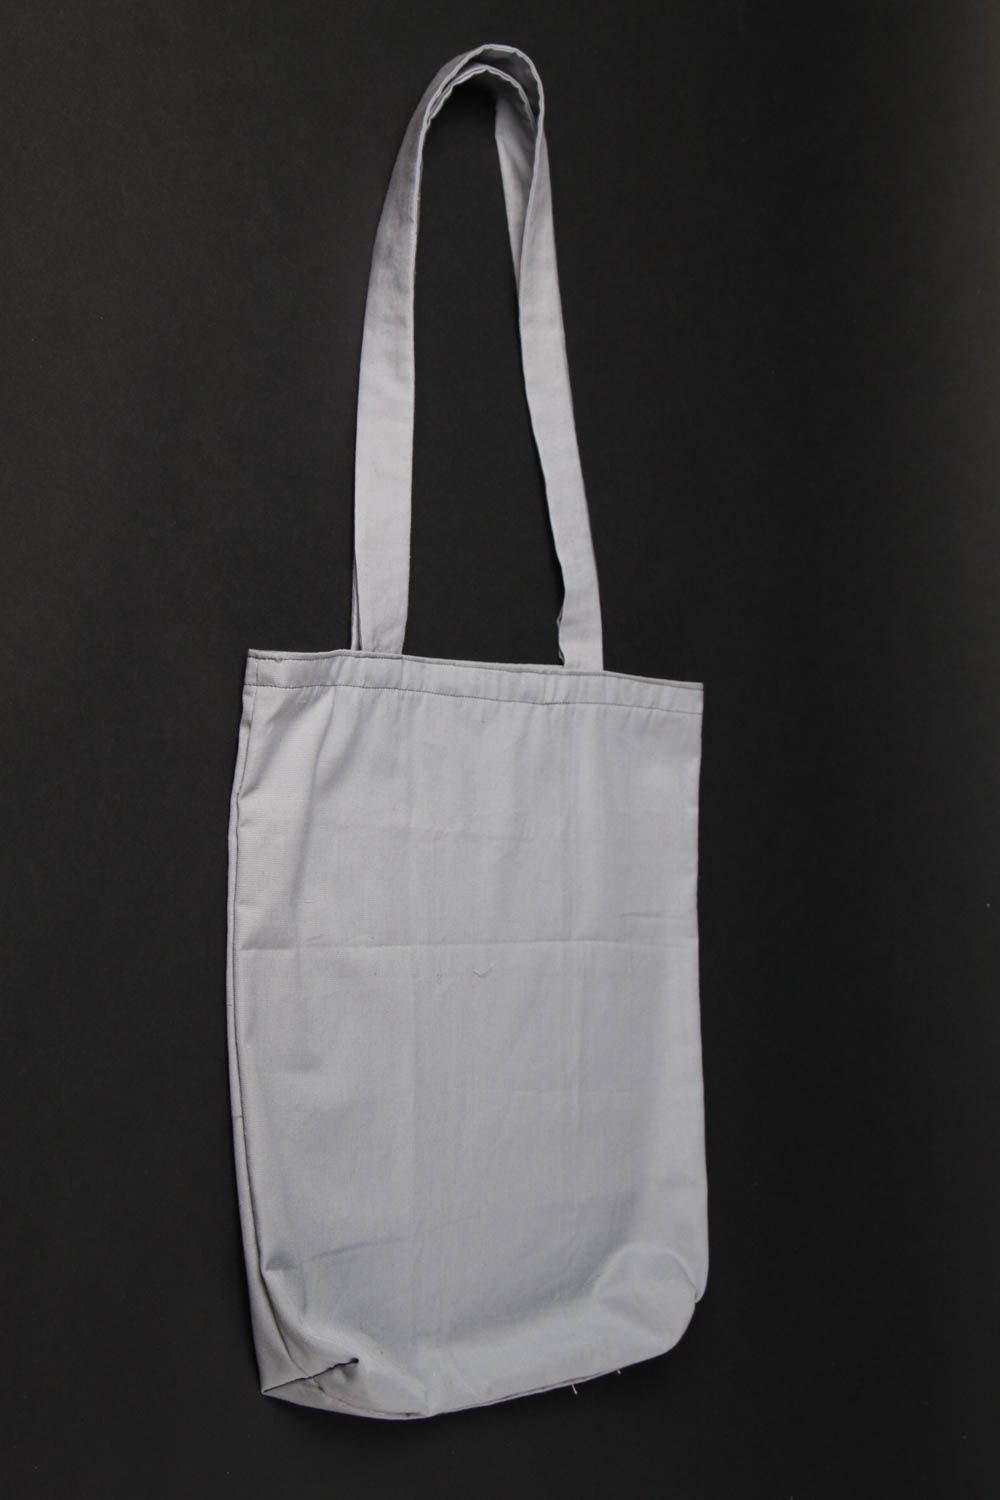 Handmade bag handbags for women fashion handbags designer accessories gift ideas photo 2